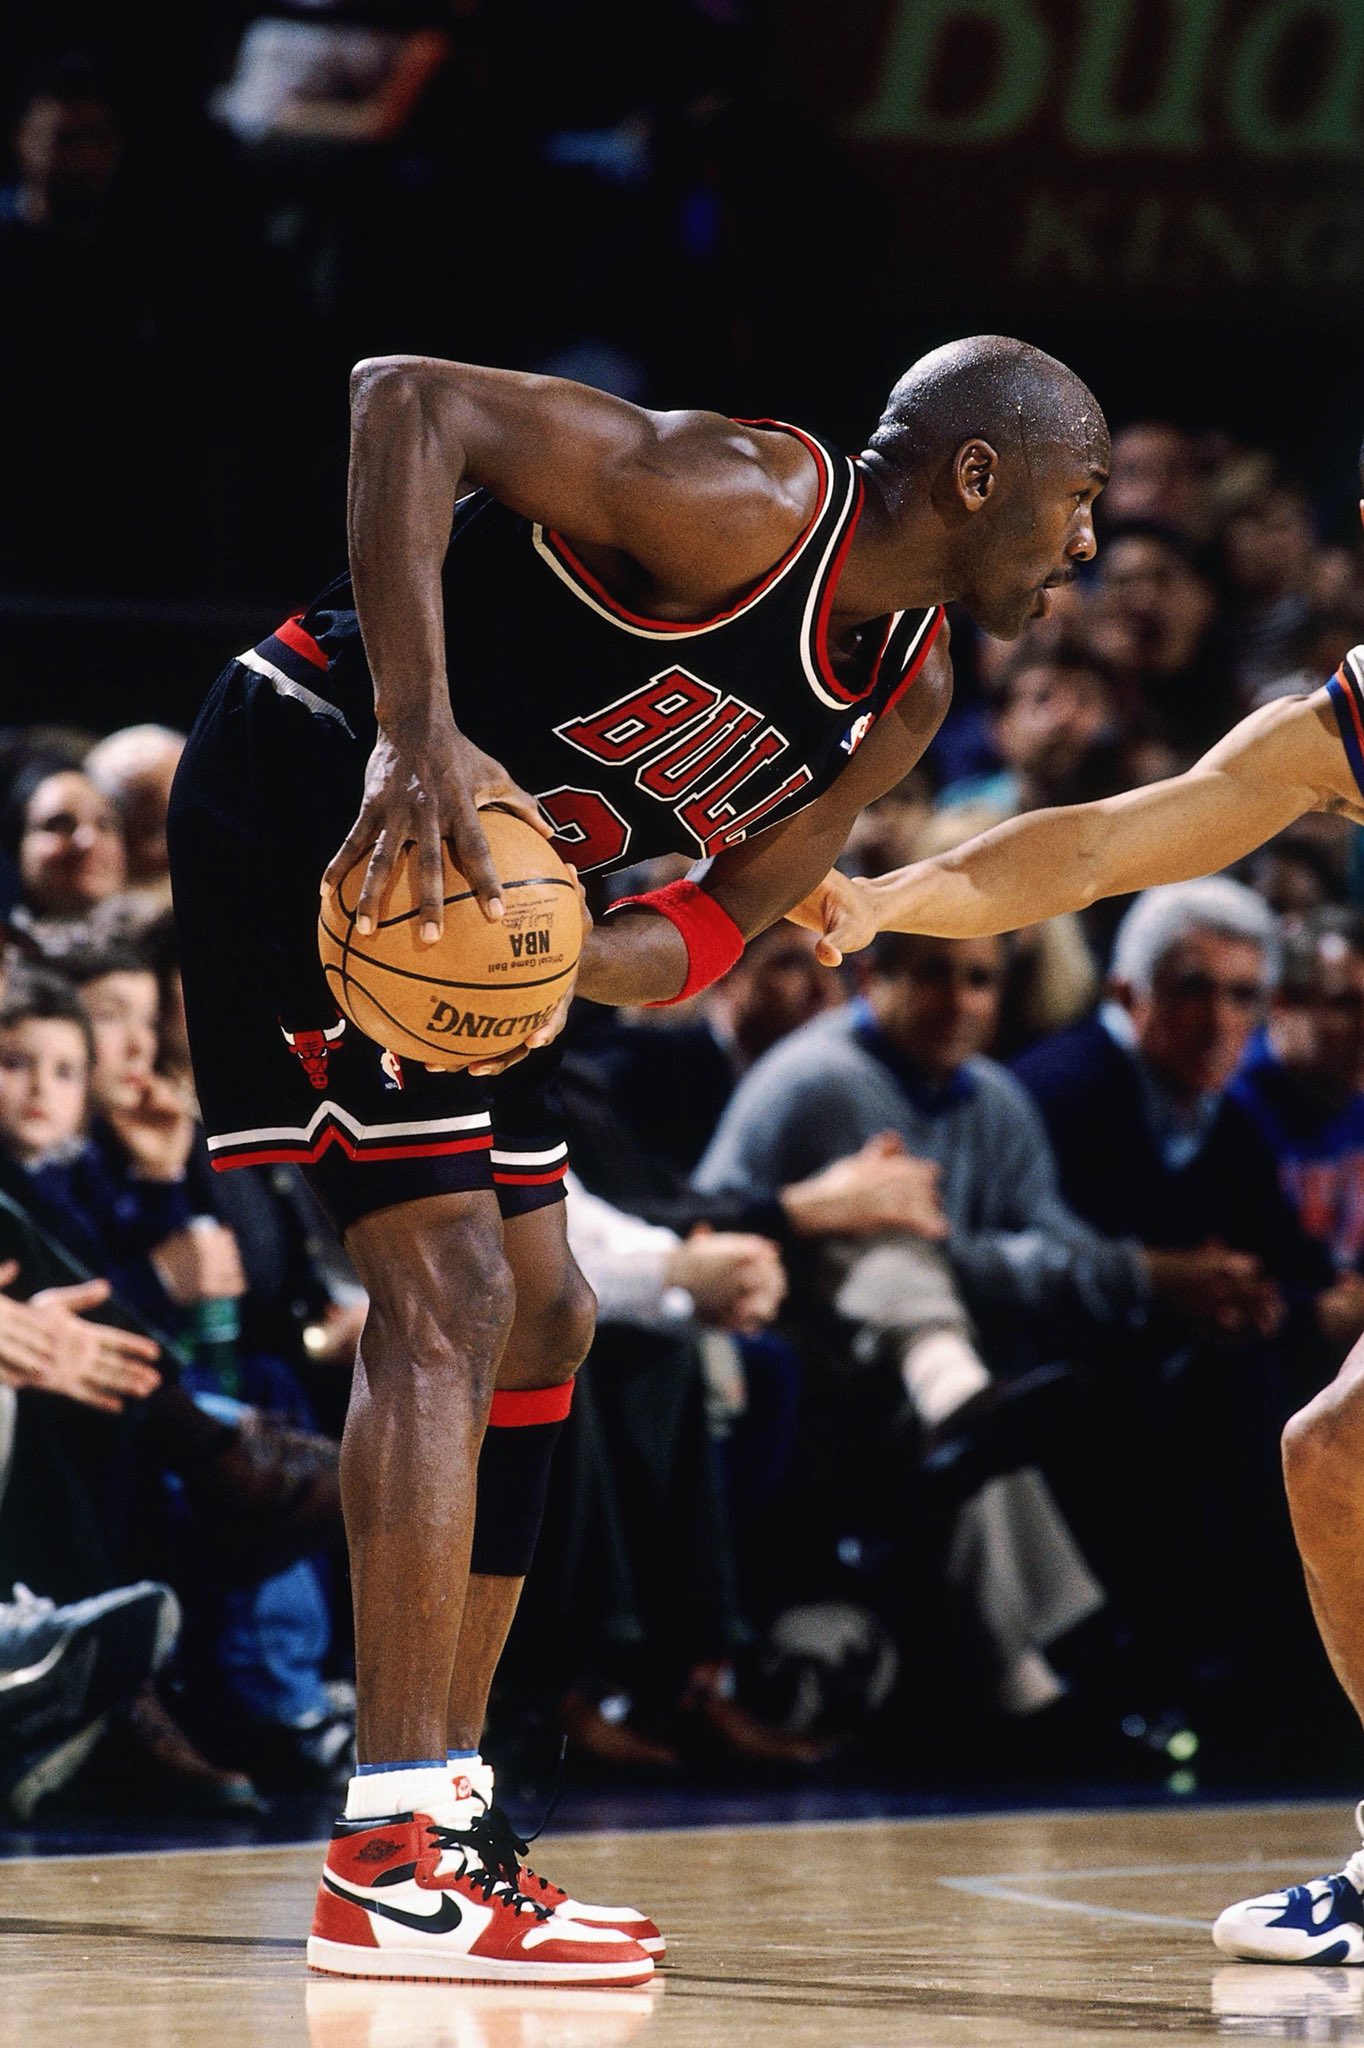 B/R Kicks on X: March 8, 1998 Michael Jordan played in an